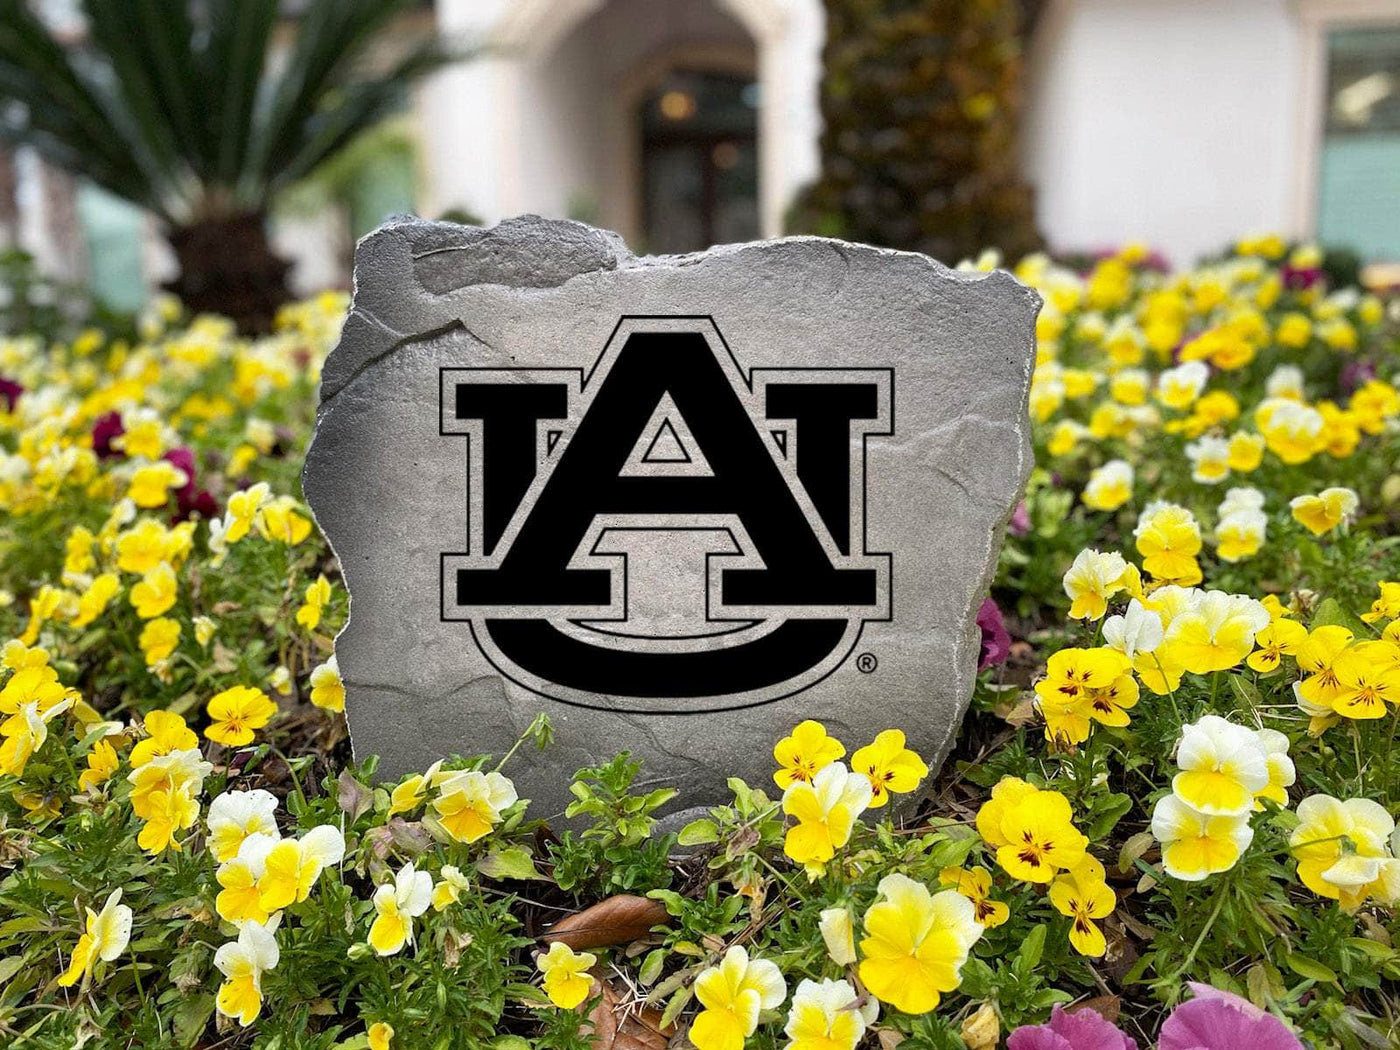 Auburn University Logo Stone